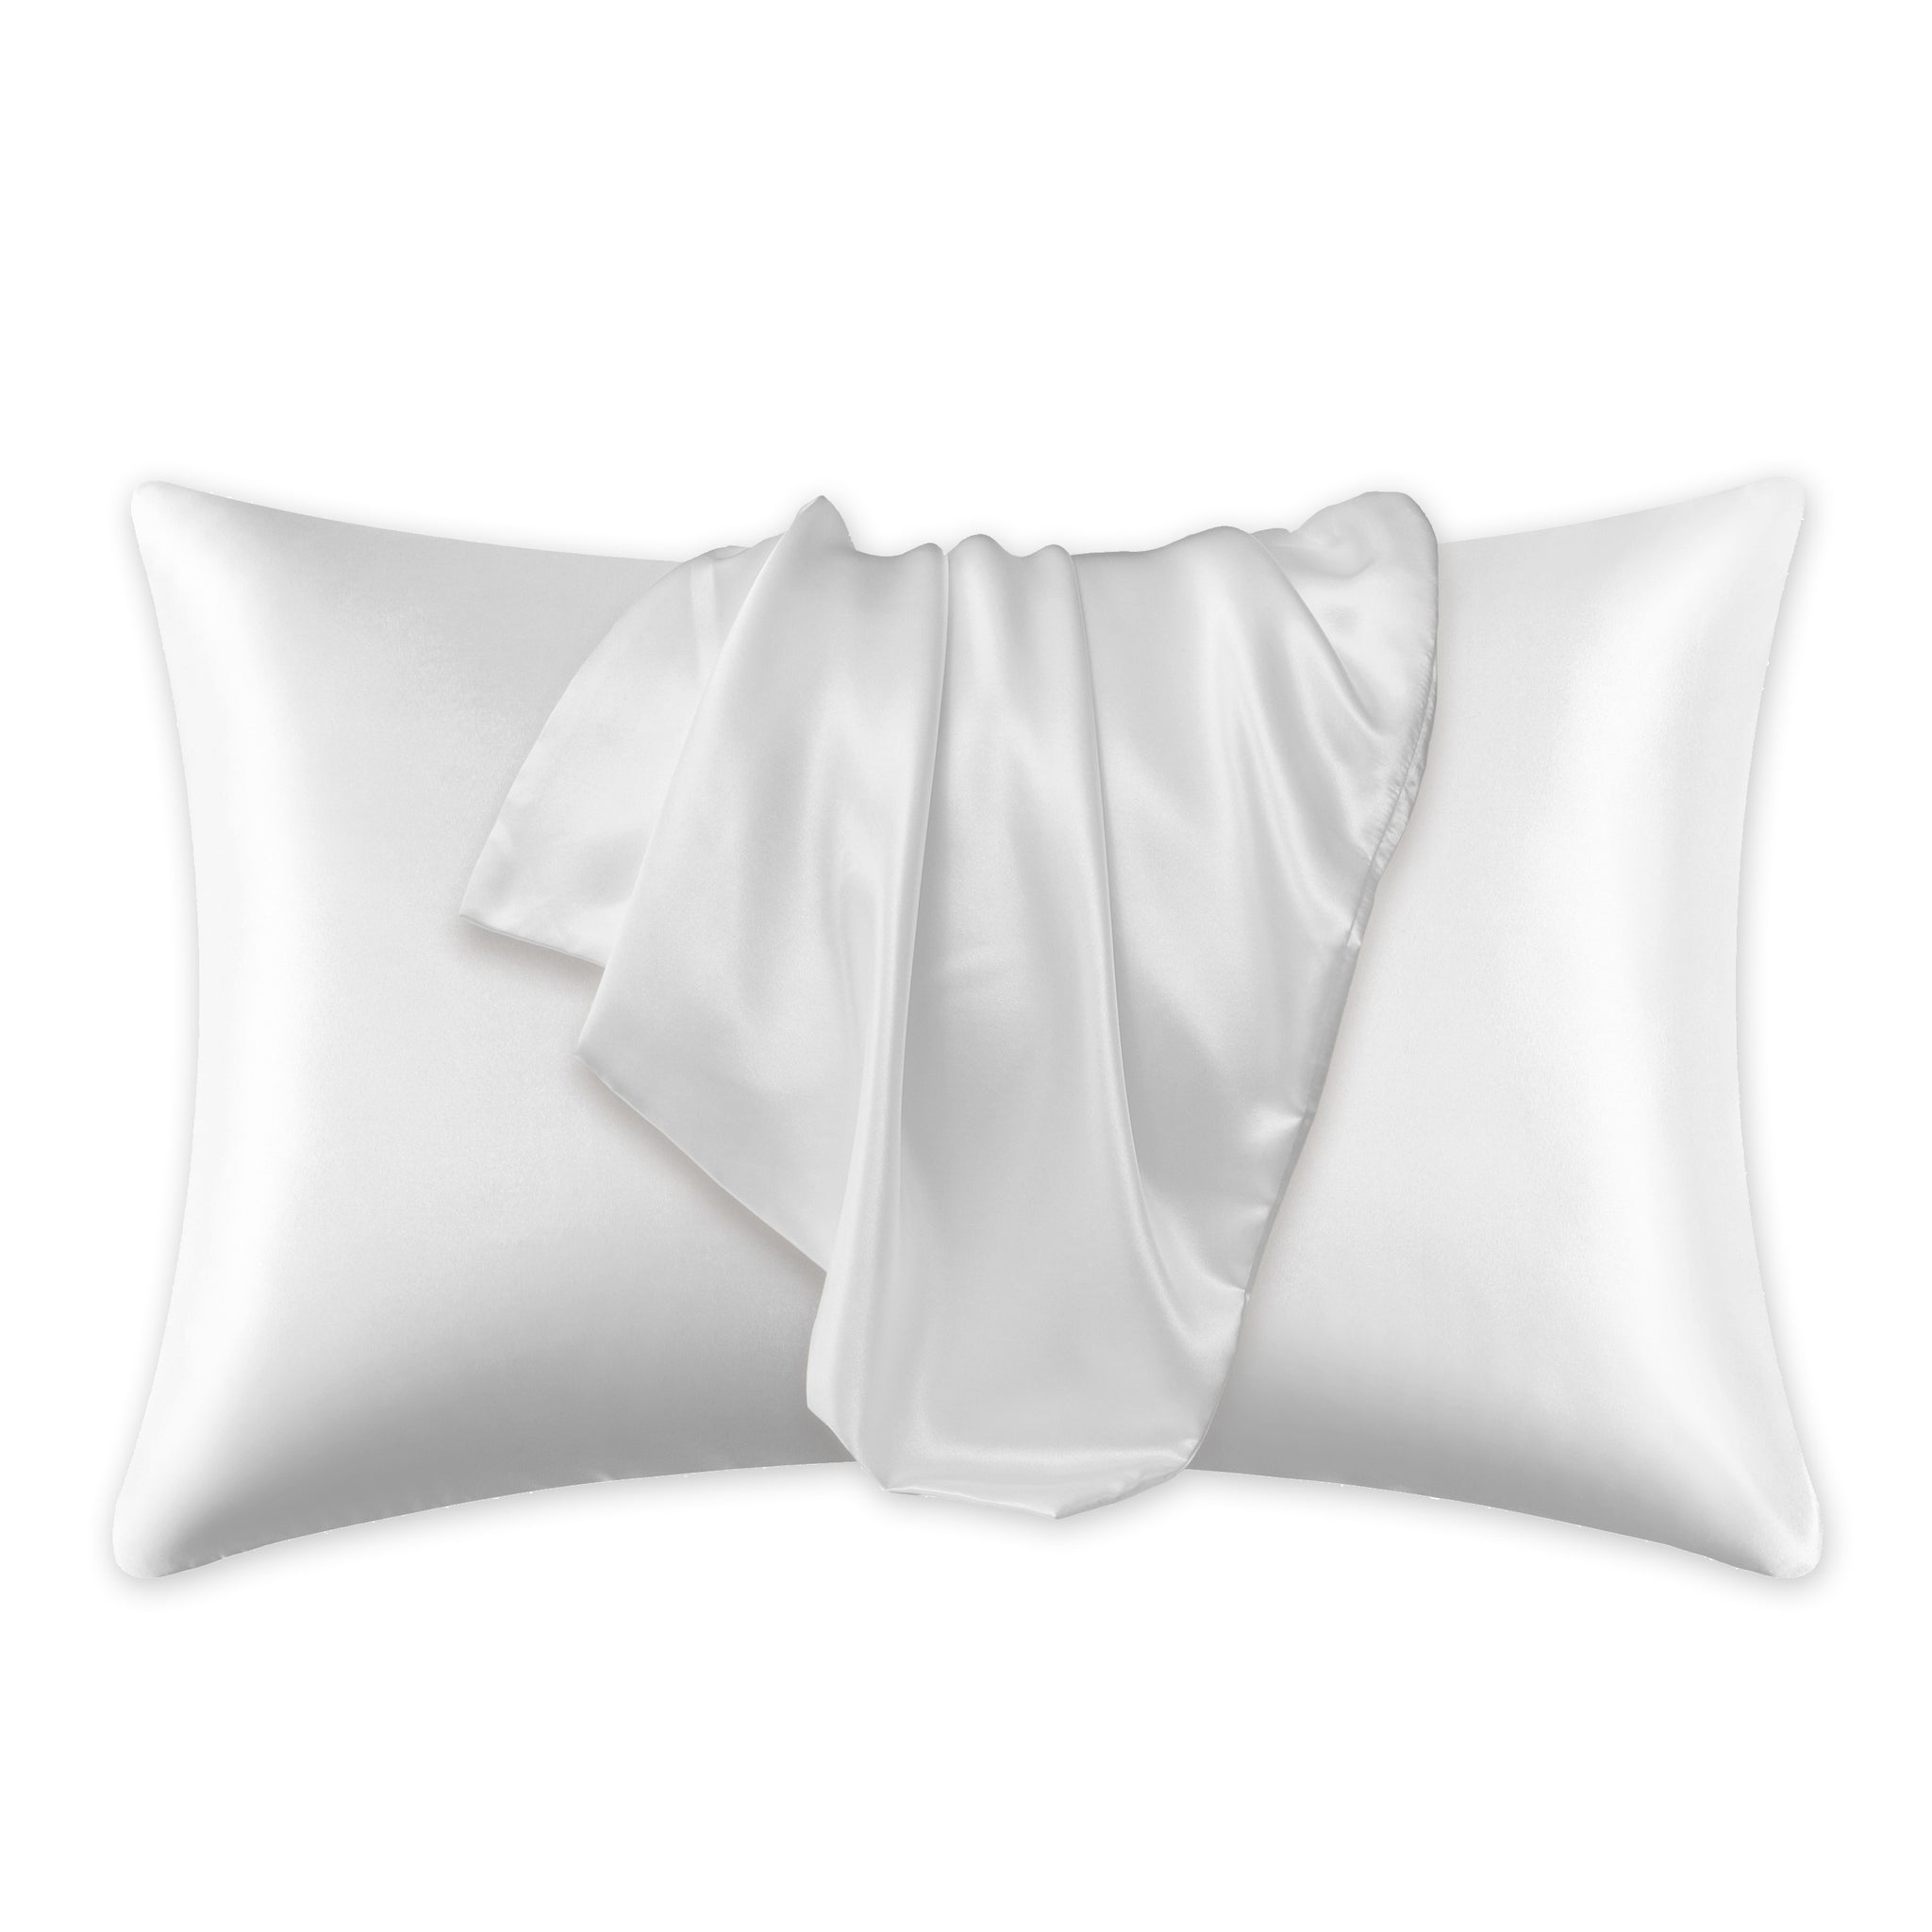 Satin-Kissenbezug Weiss 60 x 70 cm Standard-Kissengröße - Silky satin pillowcase